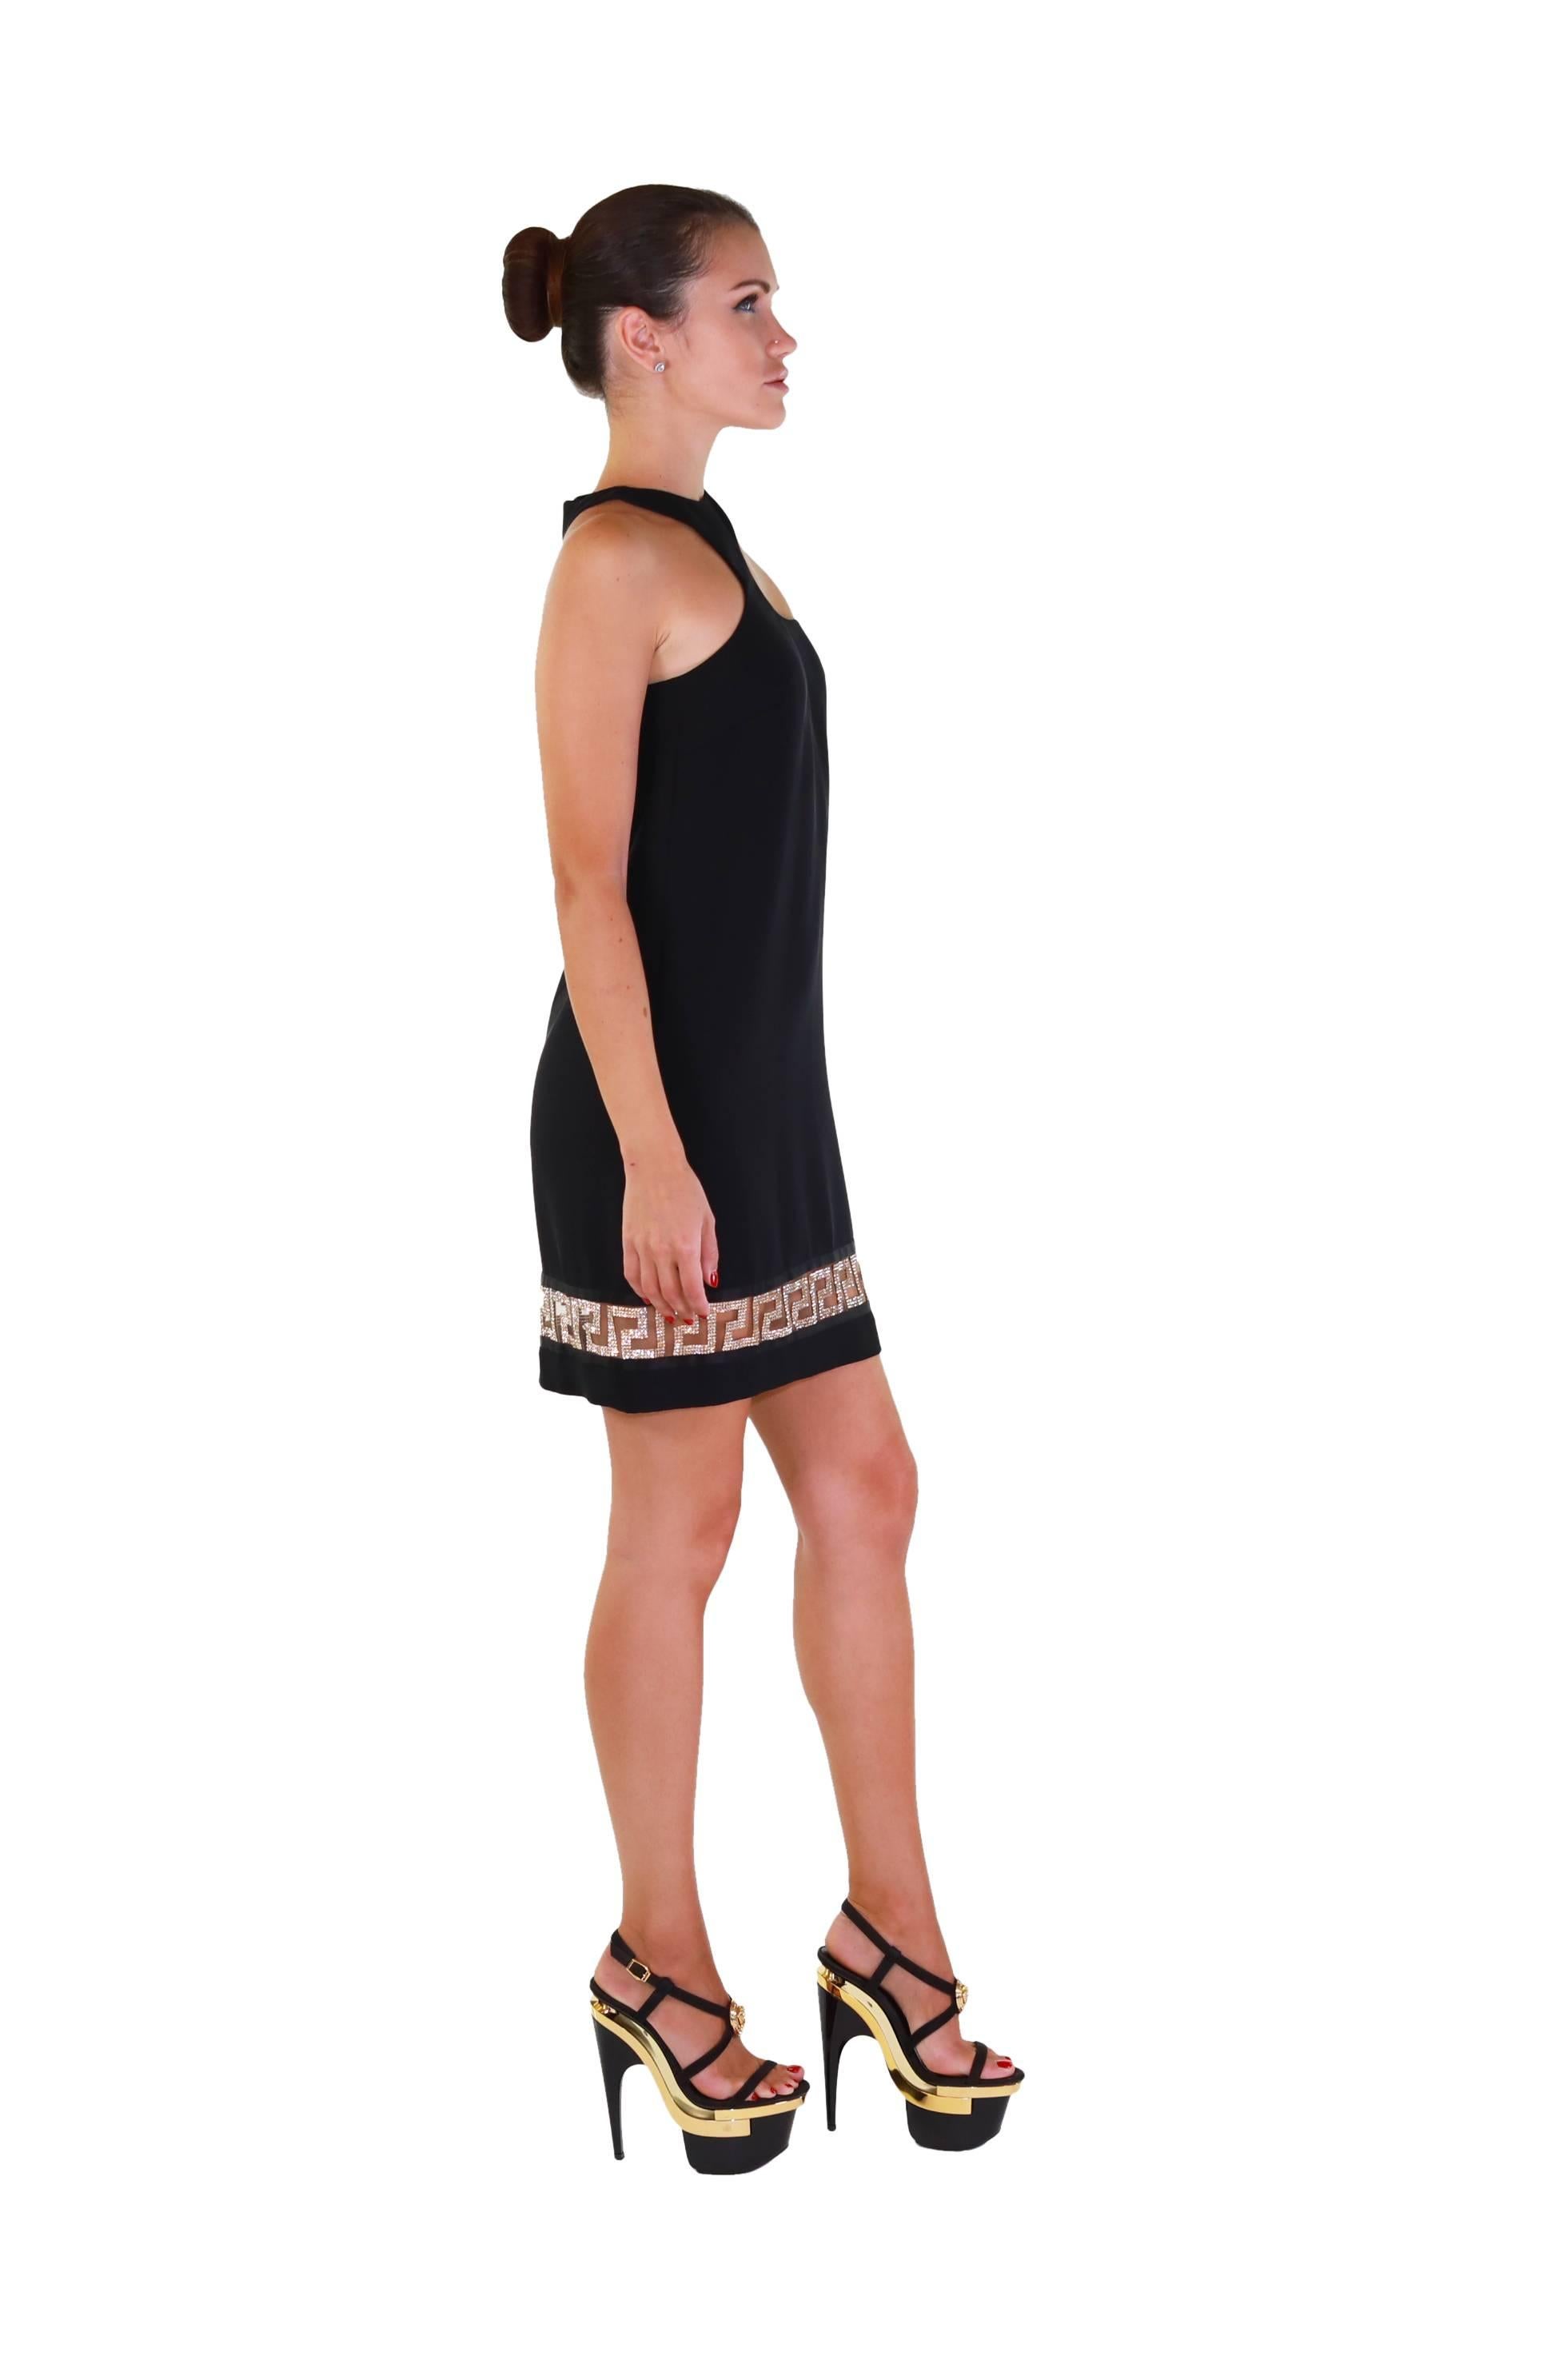 Women's Resort 2015 look # 25 VERSACE BLACK CRYSTAL-EMBELLISHED SILK-CADY DRESS 38 - 2 For Sale